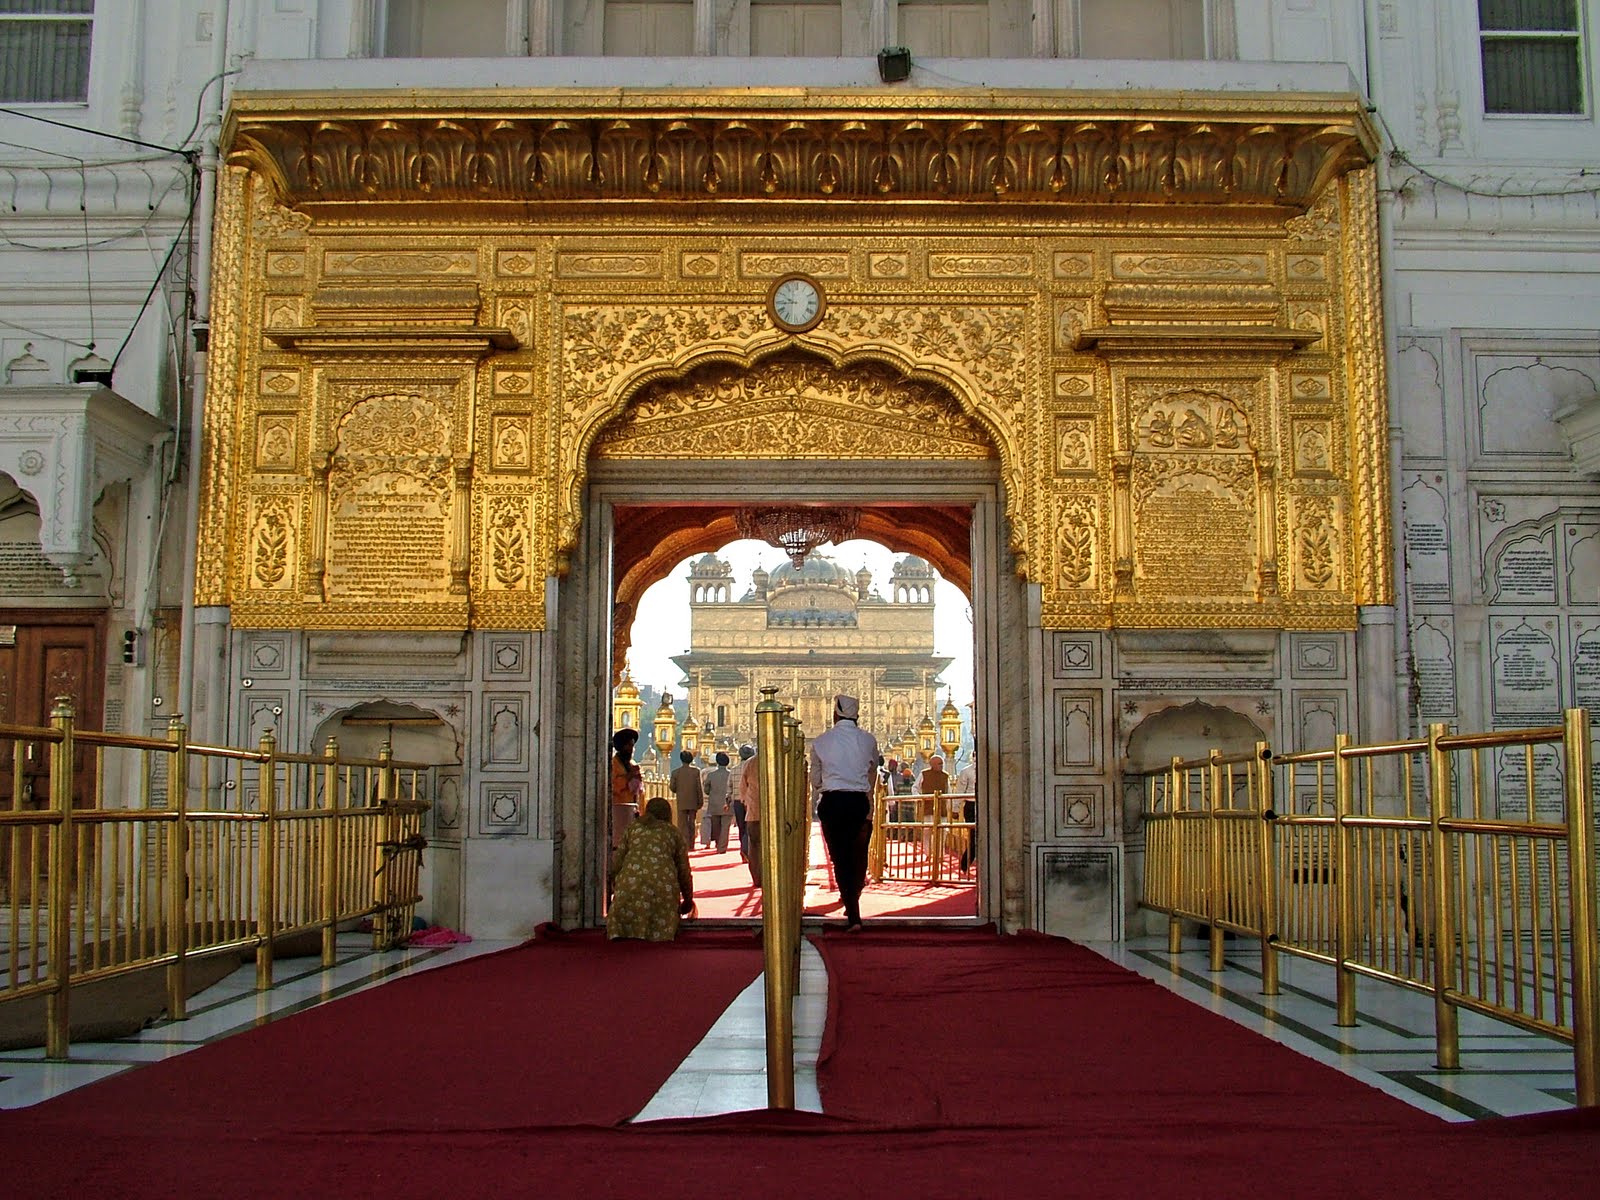 http://1.bp.blogspot.com/_K4XQxVMx9z8/TRJQmYb1mSI/AAAAAAAABgY/UsiFl9bN4Ck/s1600/Entrance_to_Golden_Temple%252C_Amritsar.jpg